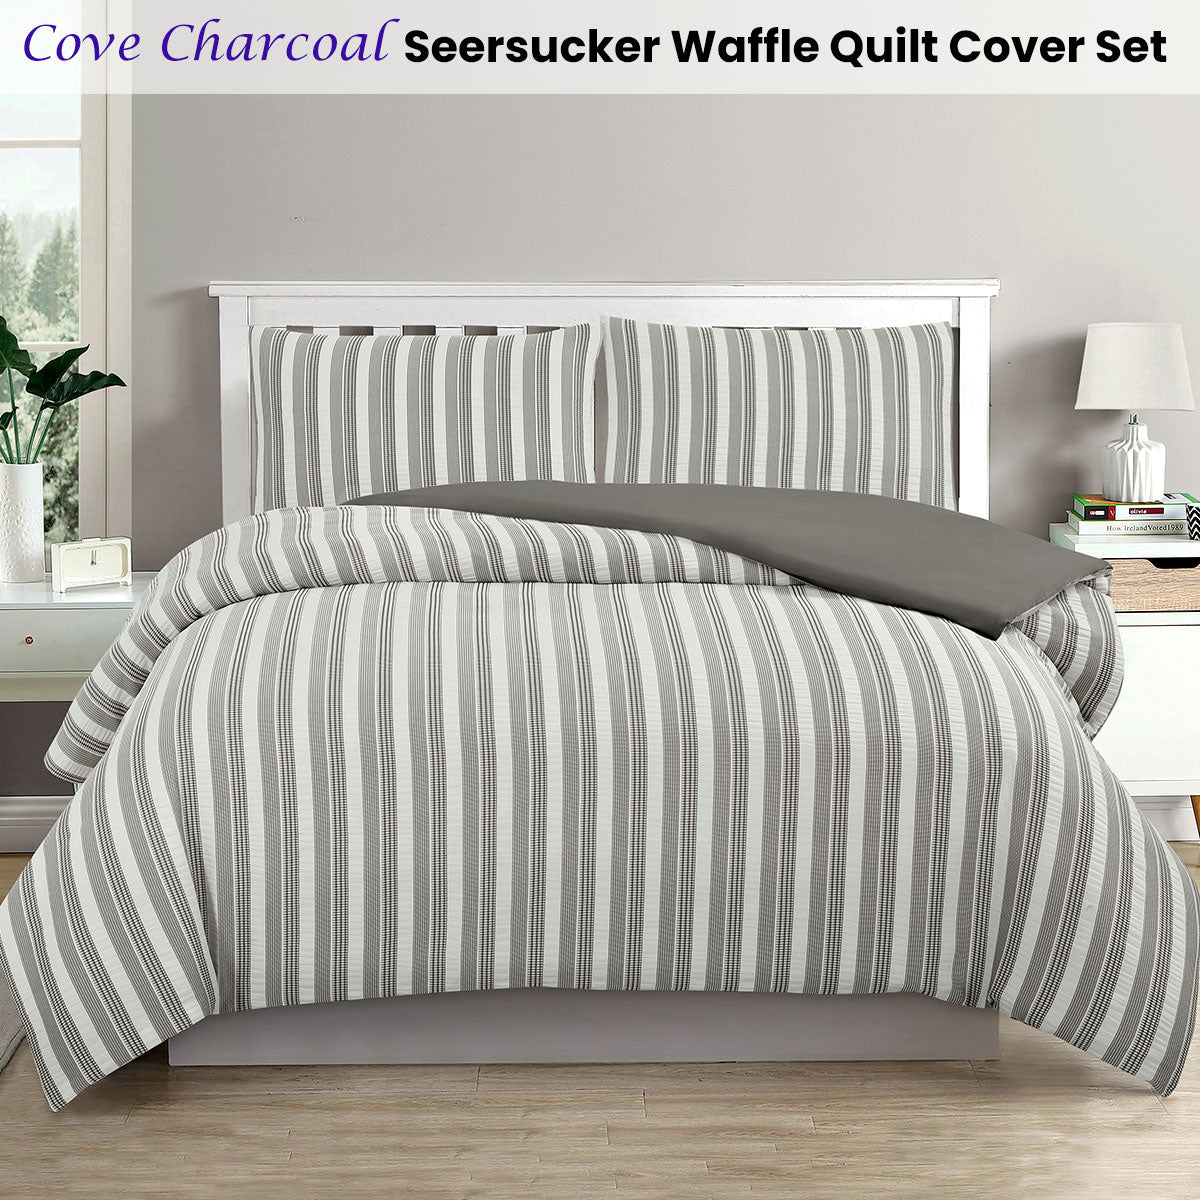 SINGLE 3-Piece Seersucker Waffle Quilt Cover Set - Charcoal